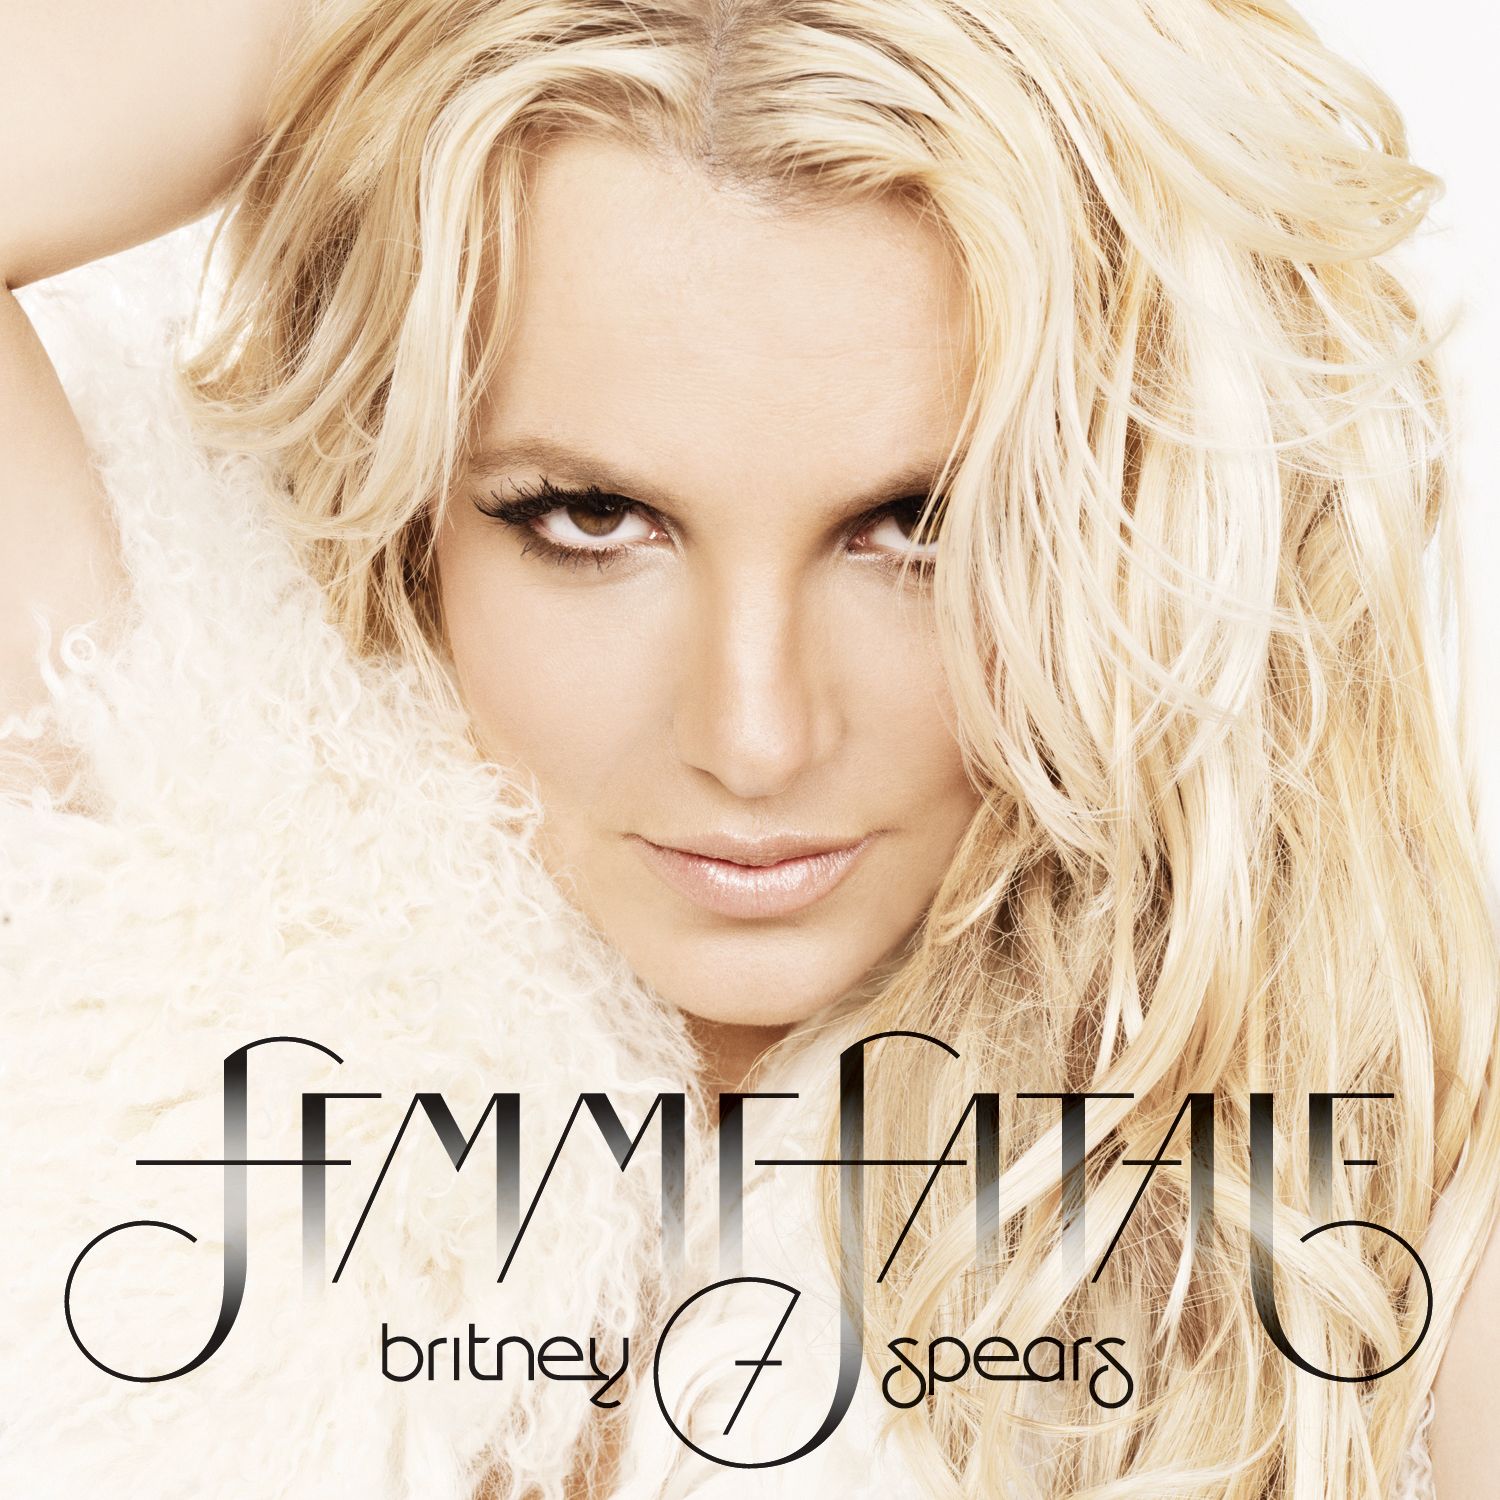 http://3.bp.blogspot.com/-3e2qDZBqBiQ/TXqzVw0_TiI/AAAAAAAAAjs/uZXaTRcgM2s/s1600/Britney-Spears-Femme-Fatale.jpg